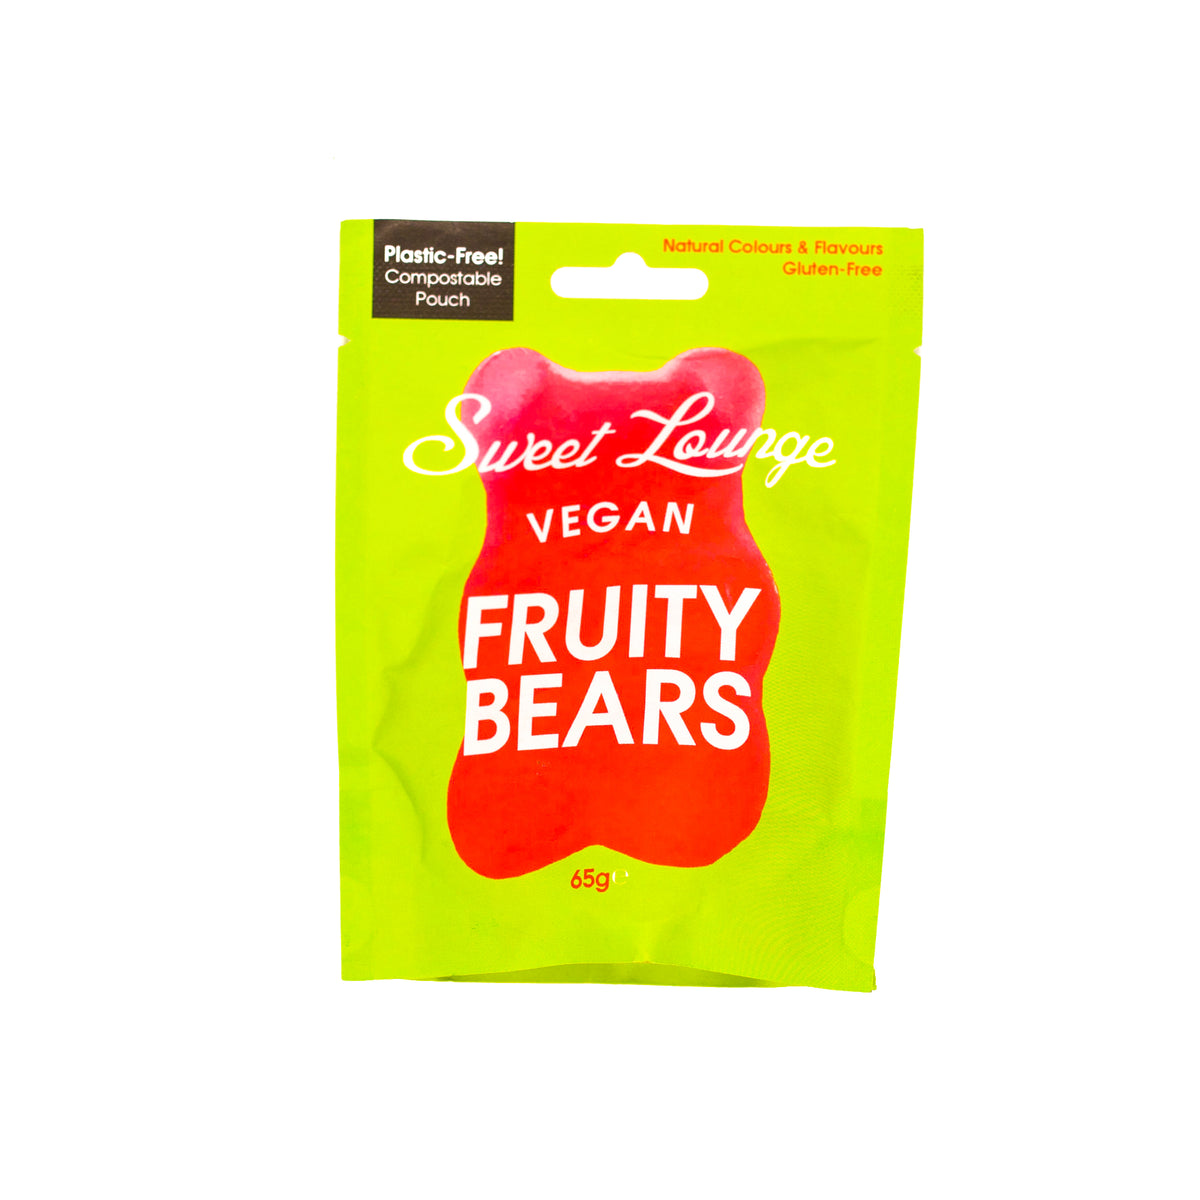 Sweet Lounge Fruity Bears